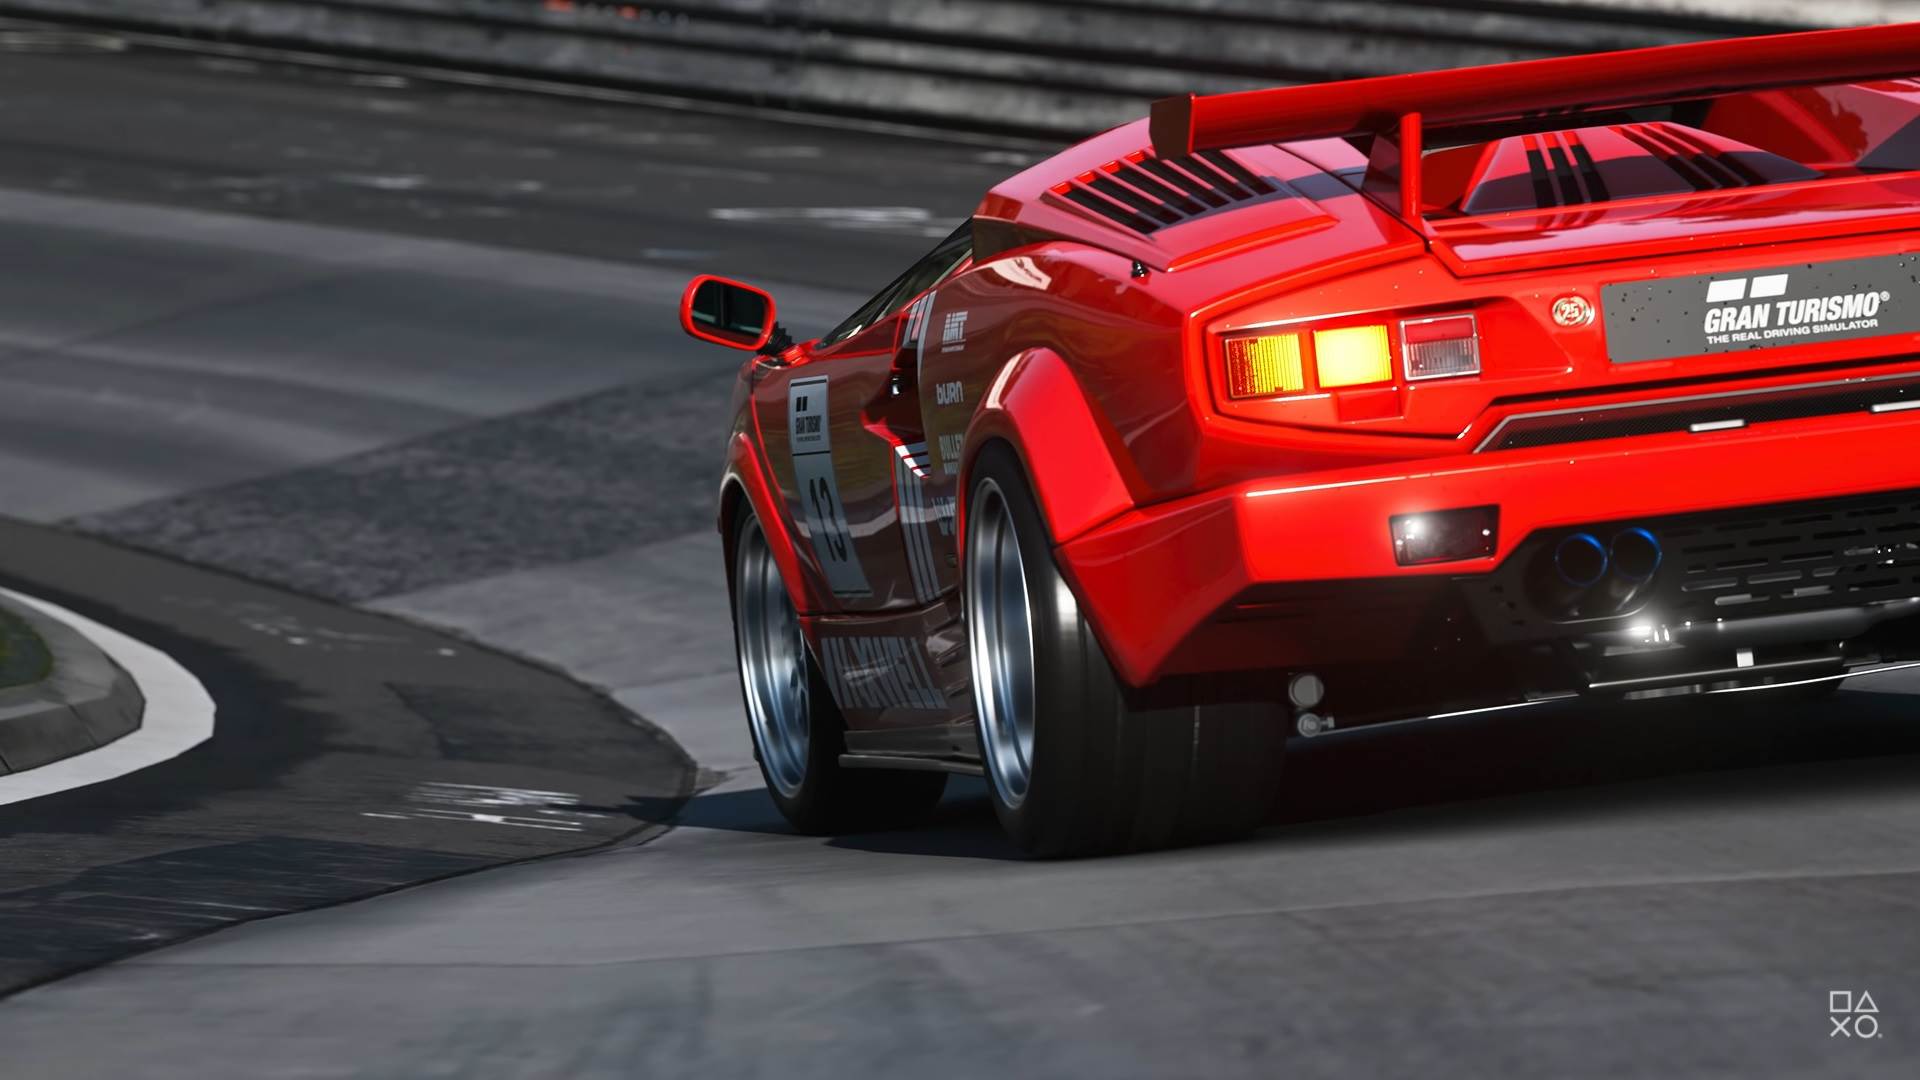  Gran Turismo 7 (8).jpg 